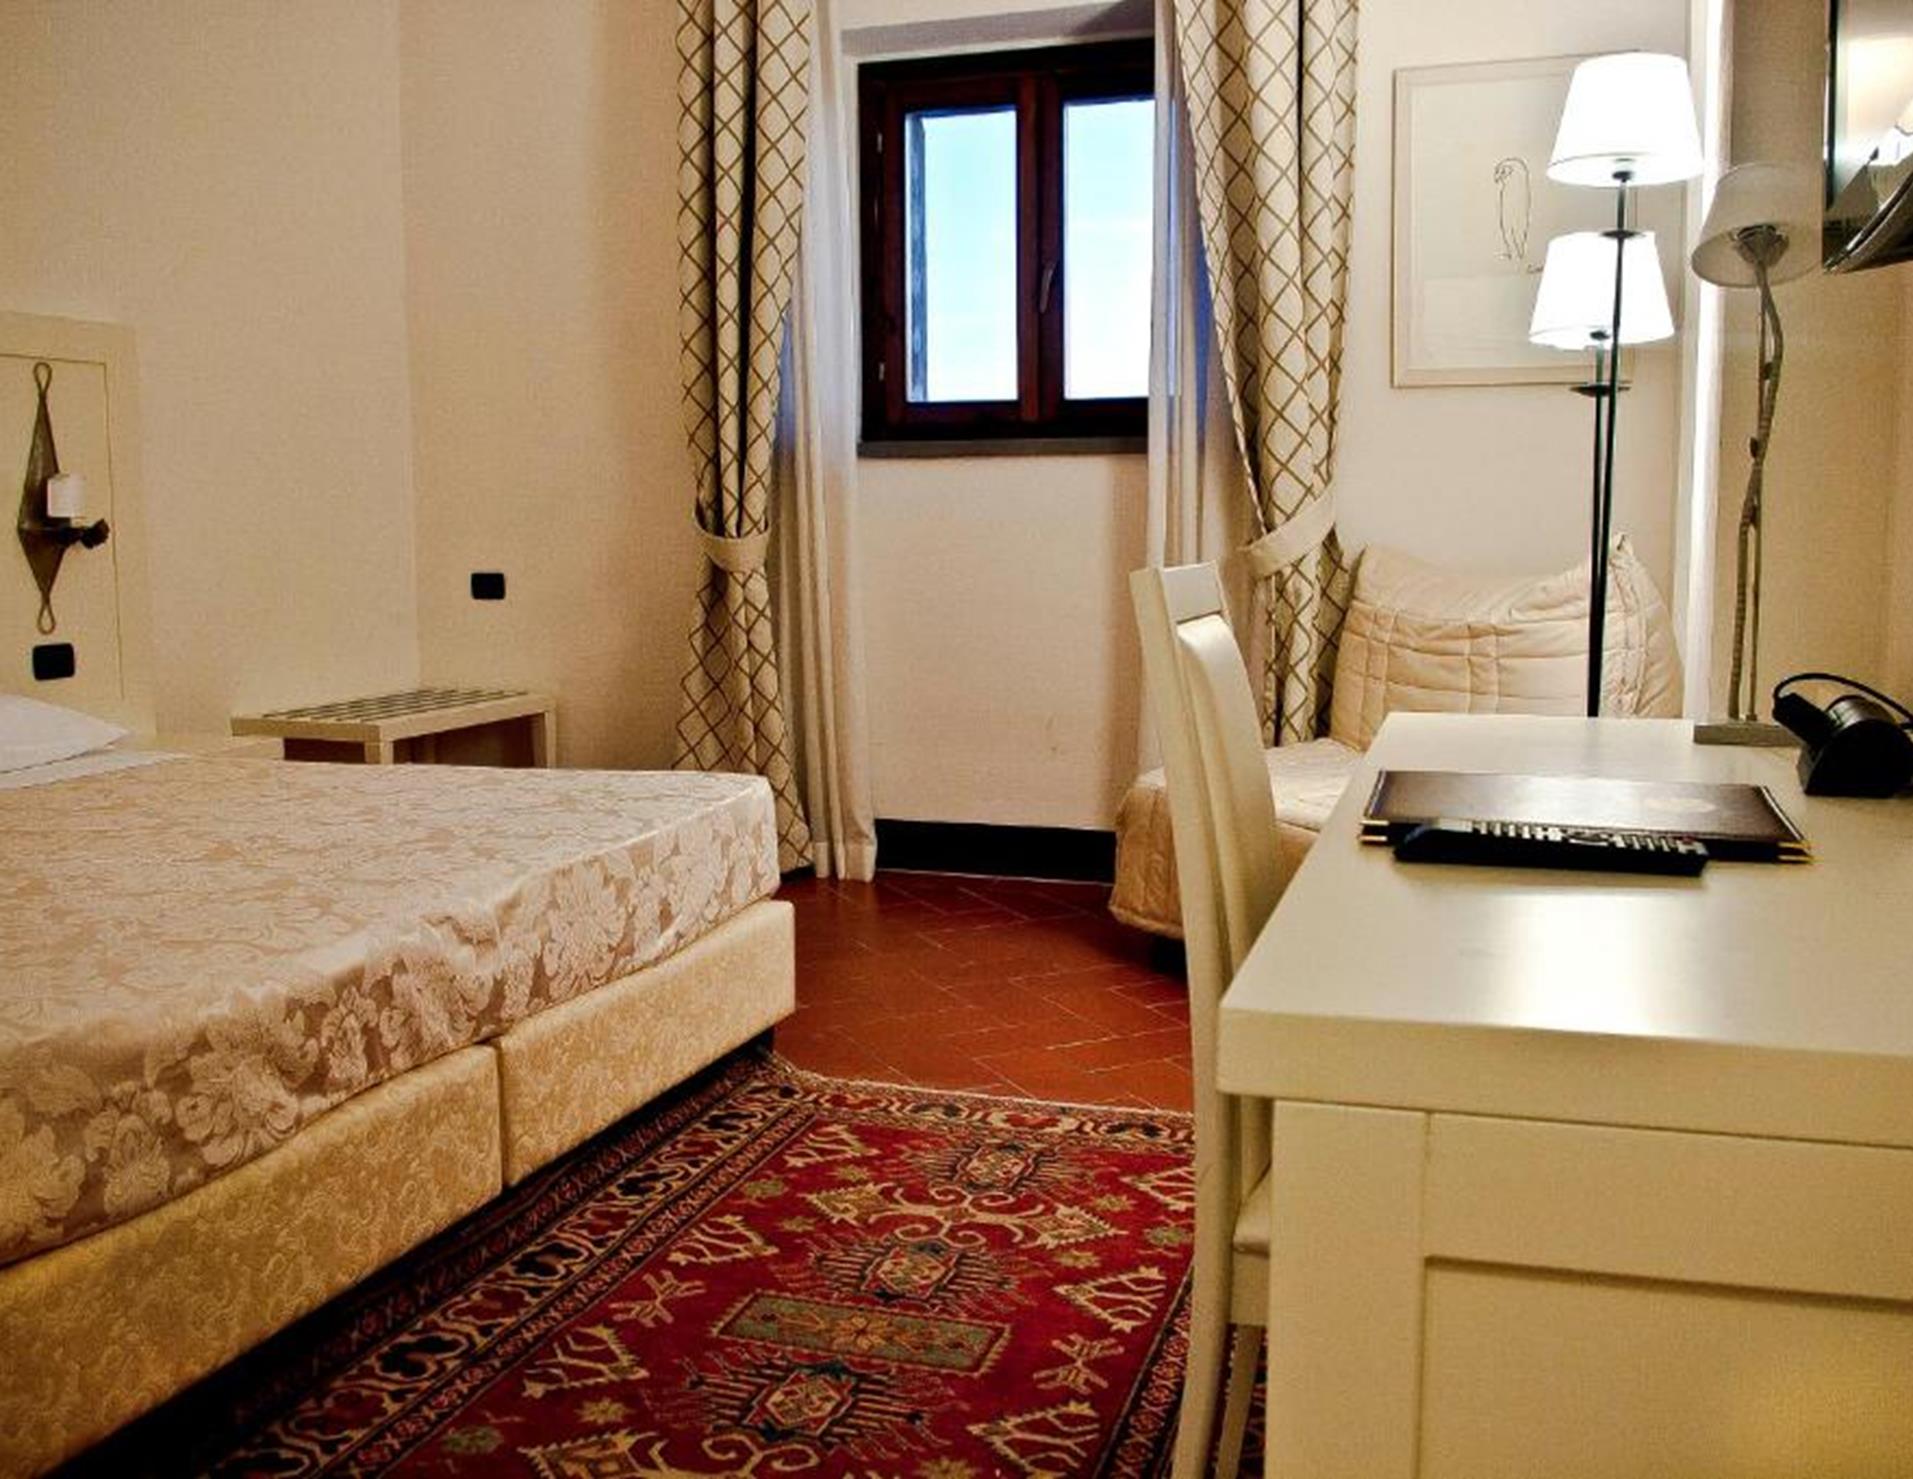 Hotel San Miniato - Room 5